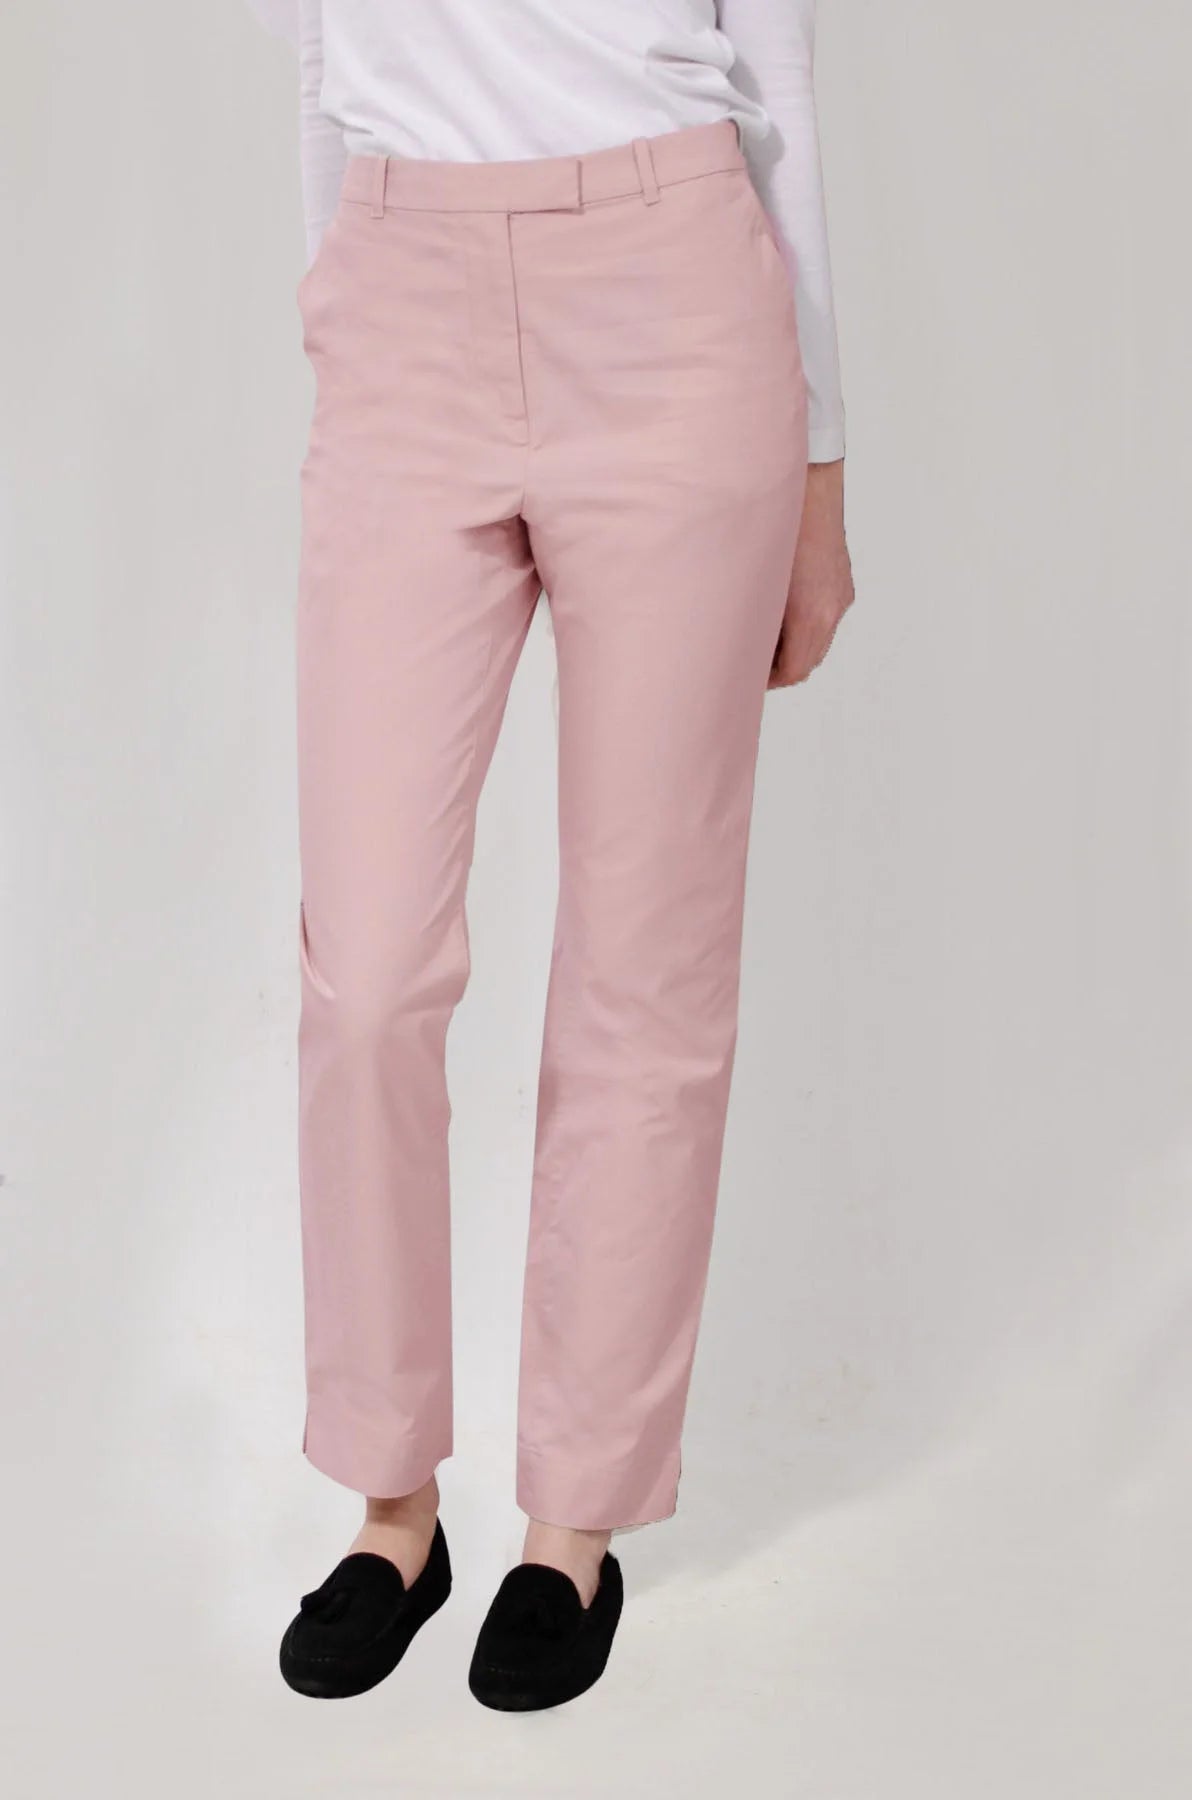 M&S Straight Leg Chino Trousers Pink / 10 / Short